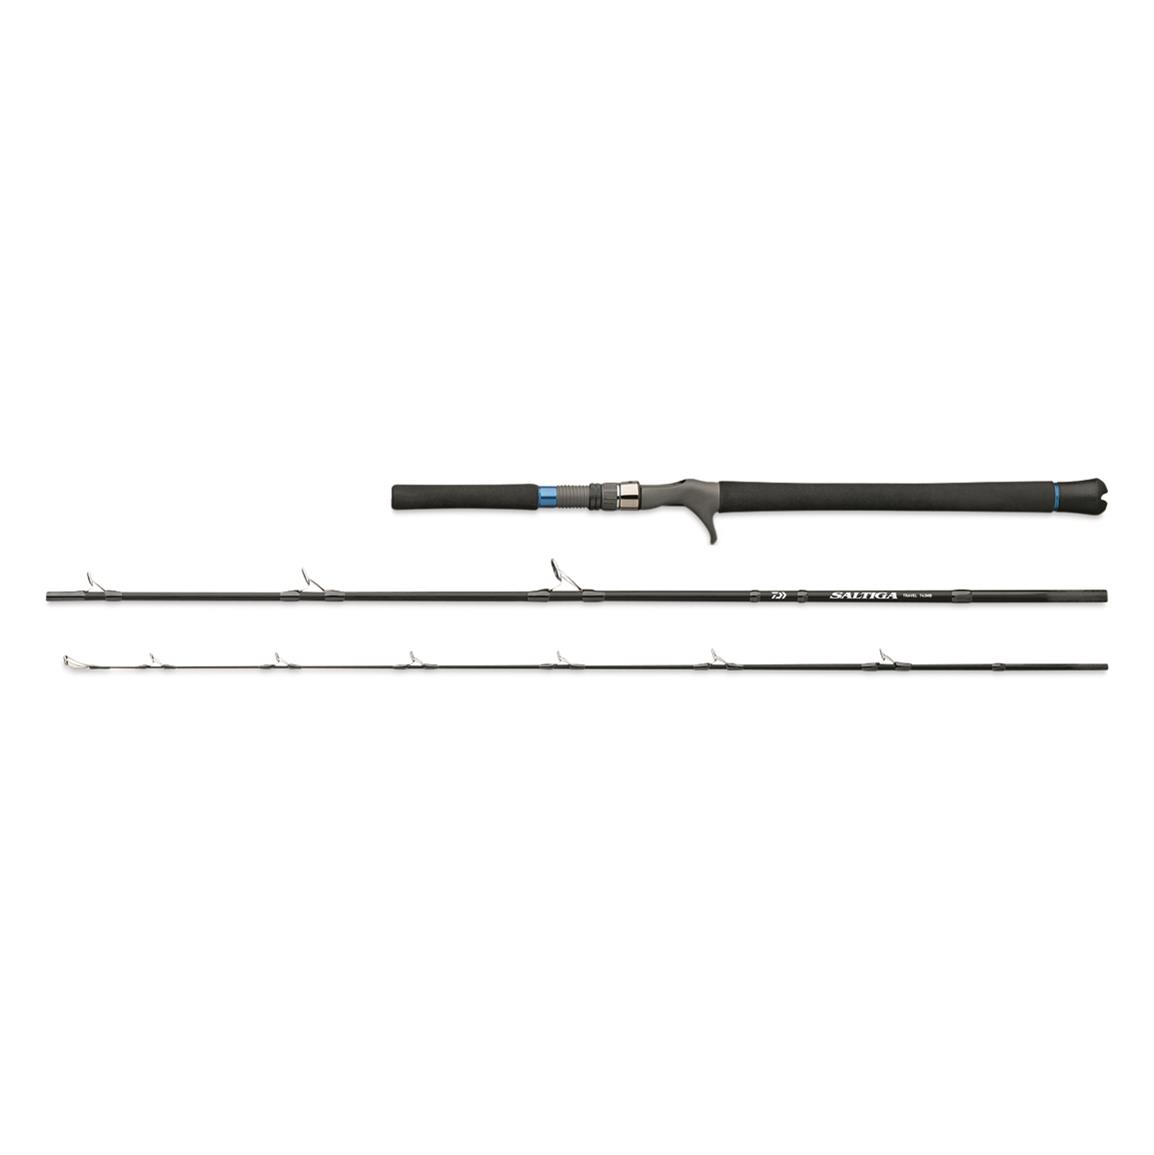 Daiwa Saltiga Saltwater 3 Piece Spinning Travel Rod, 7'4" Length, Medium Power, Fast Action